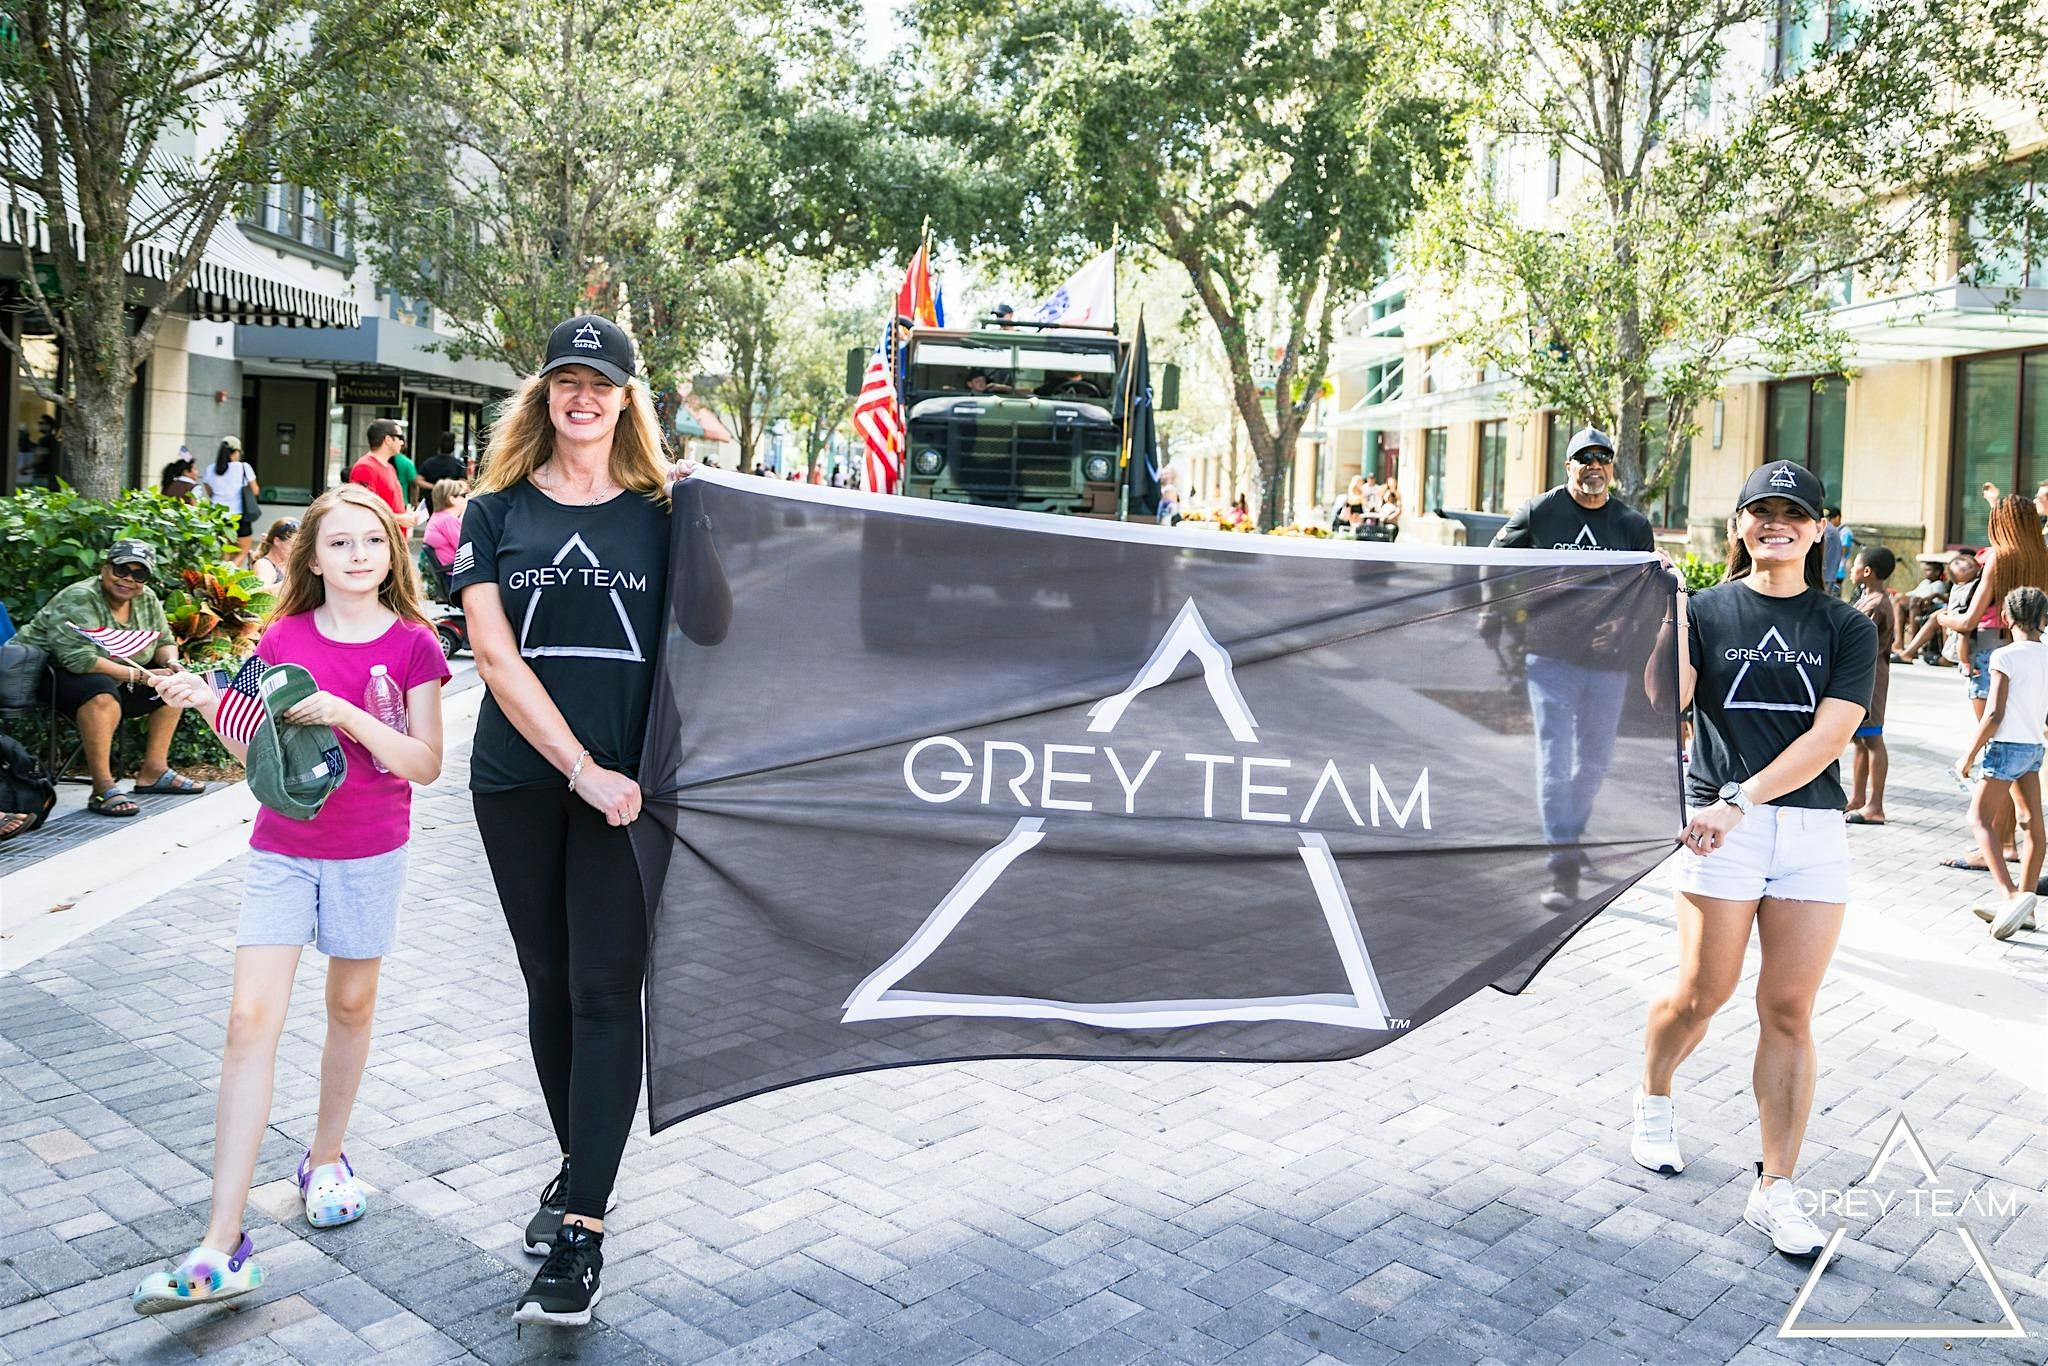 City of Palm Beach Veteran’s Day Parade – Grey Team Volunteer Sign-Up